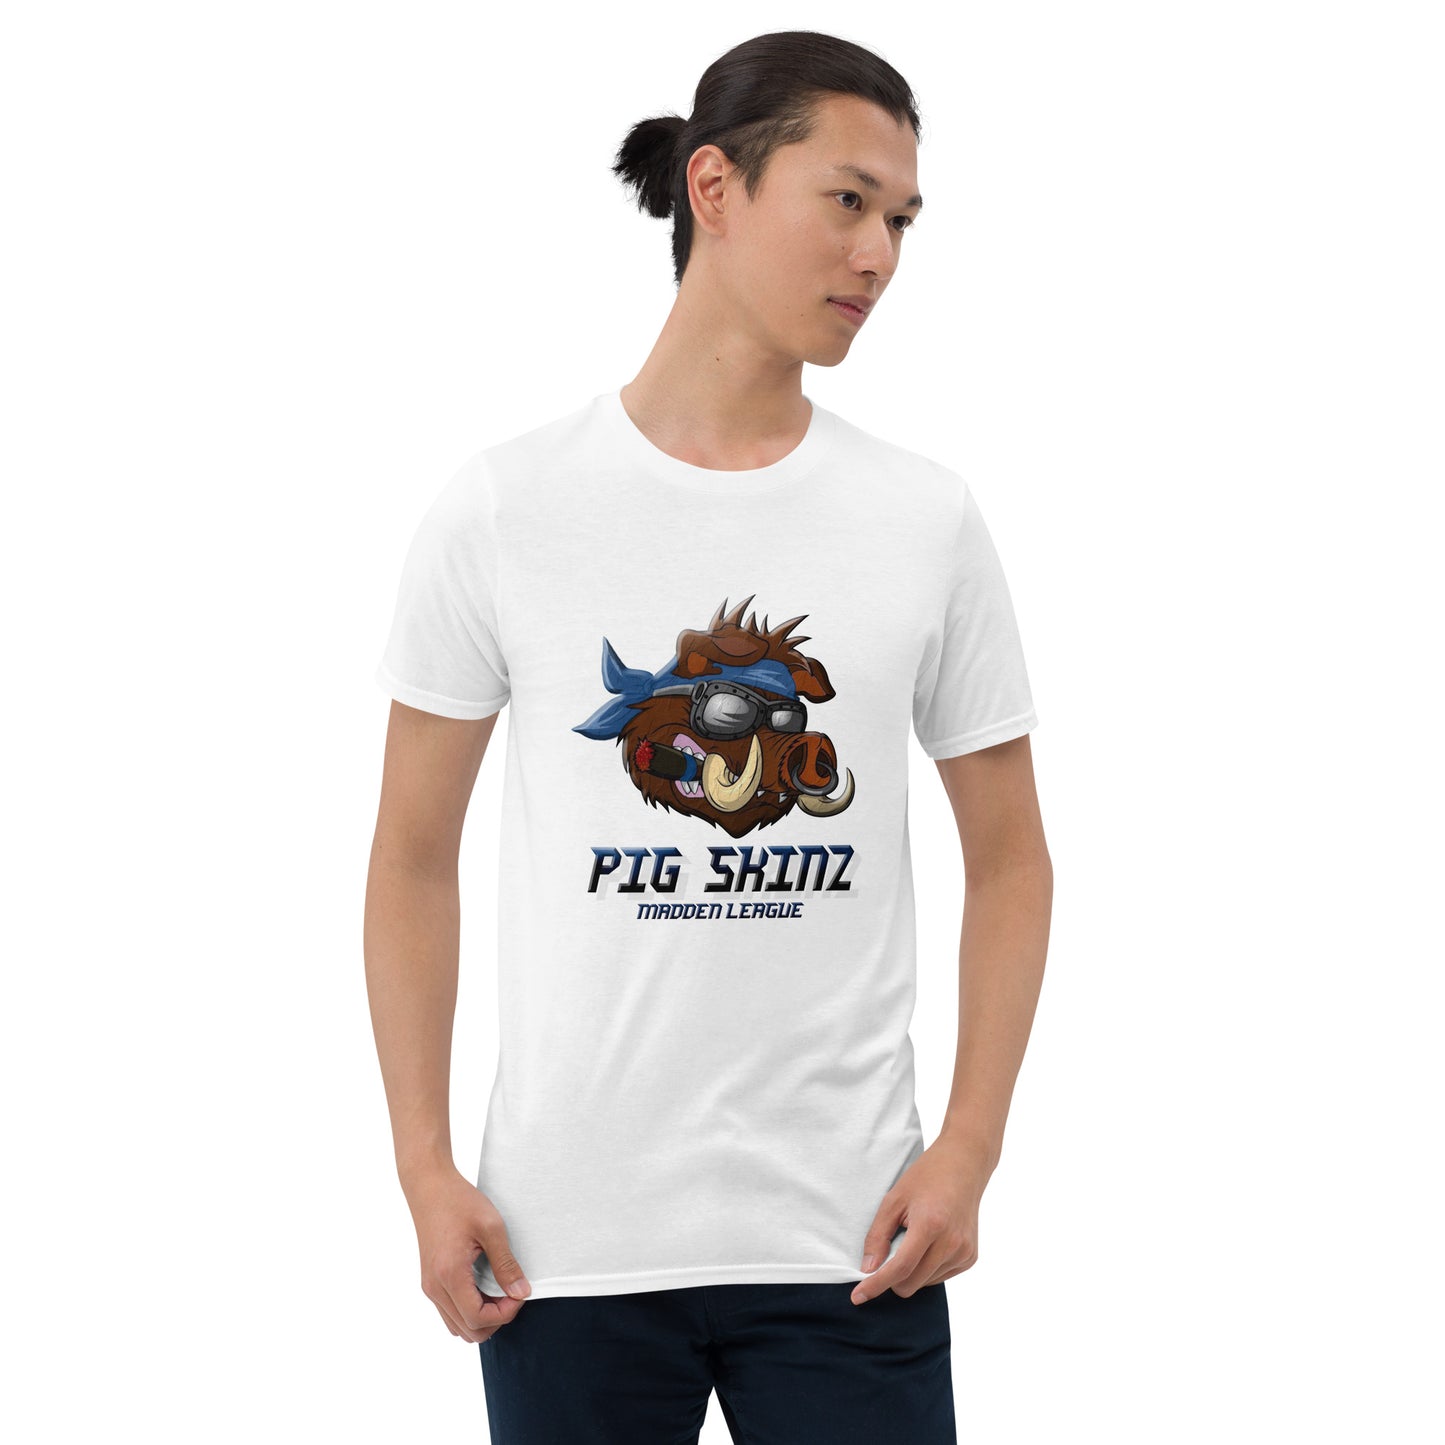 League 2 - Pig Skinz League T-Shirt